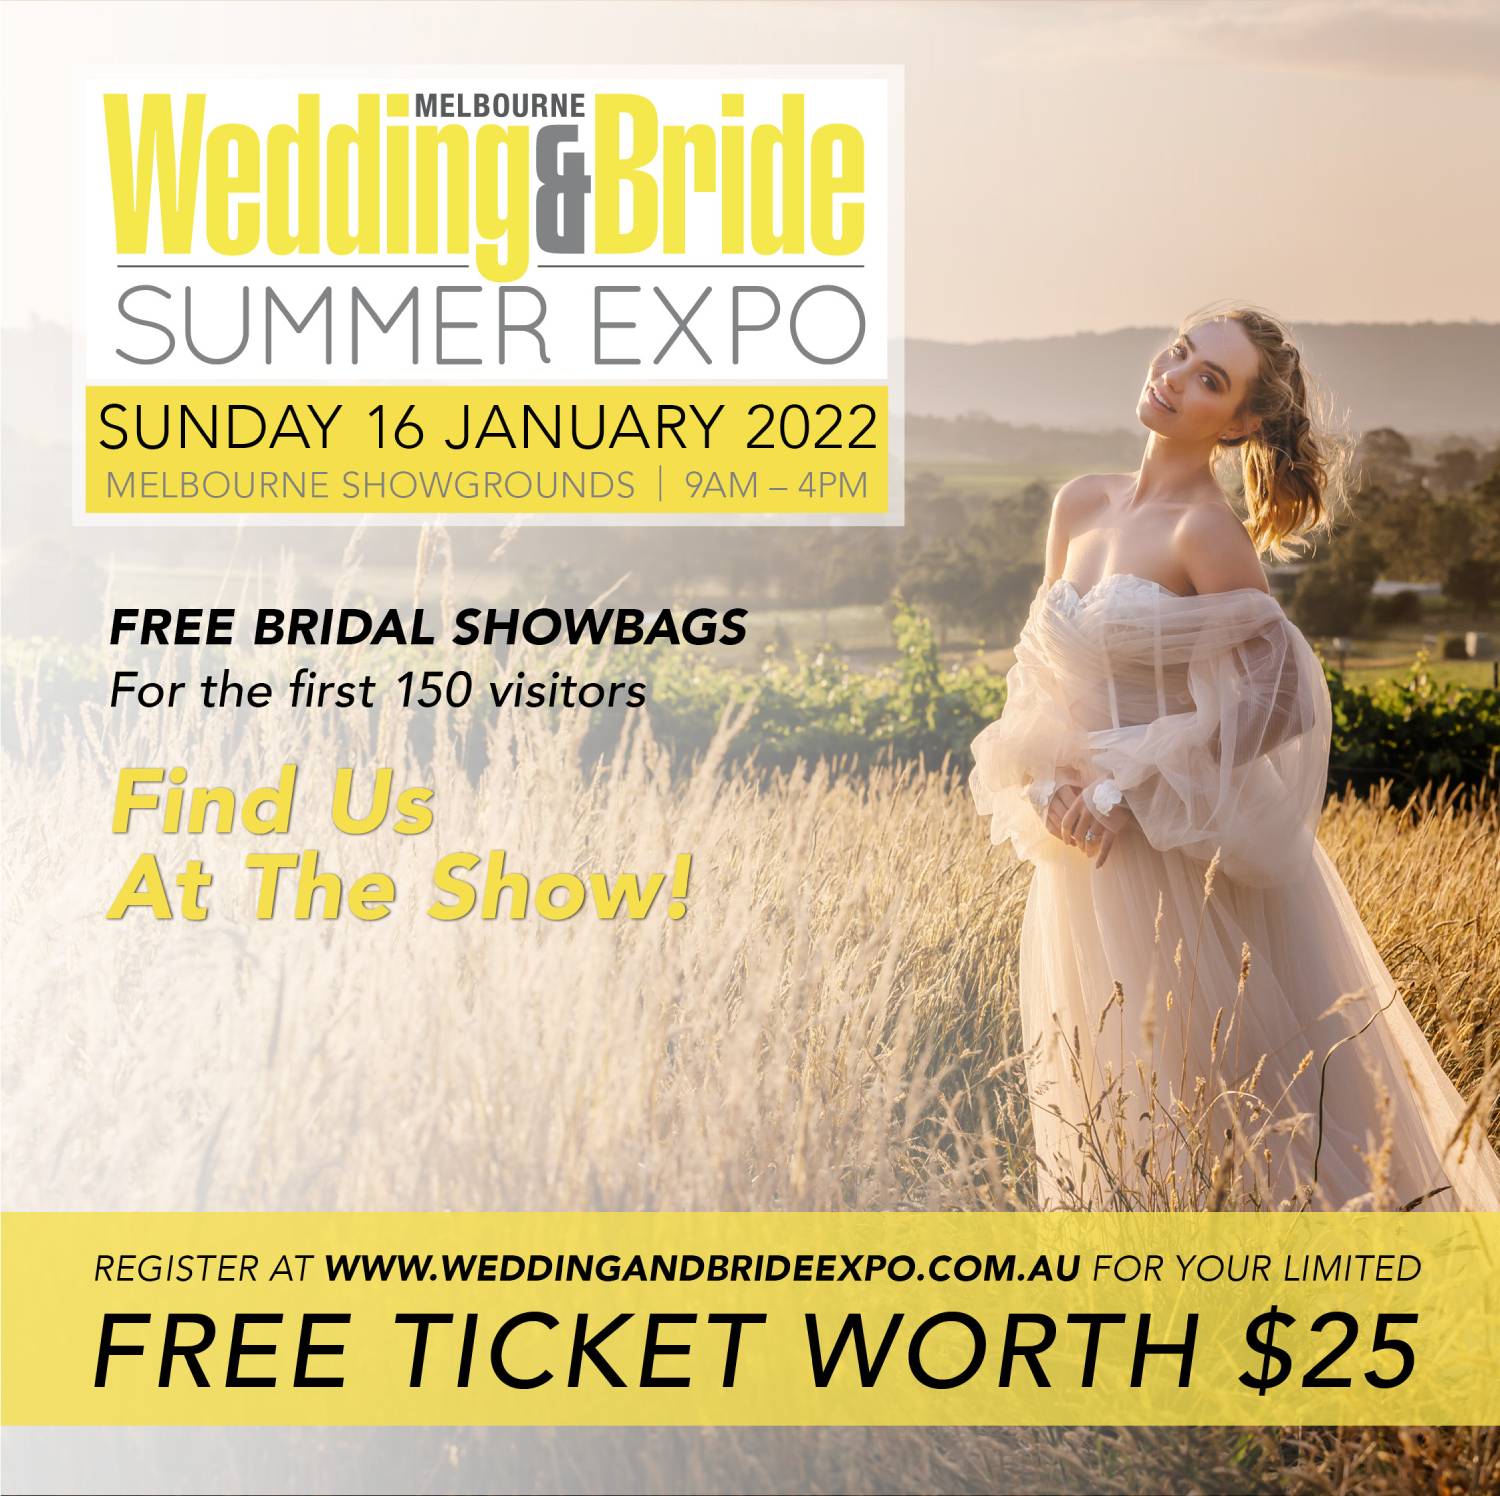 Melbourne Wedding & Bride Expo 2022